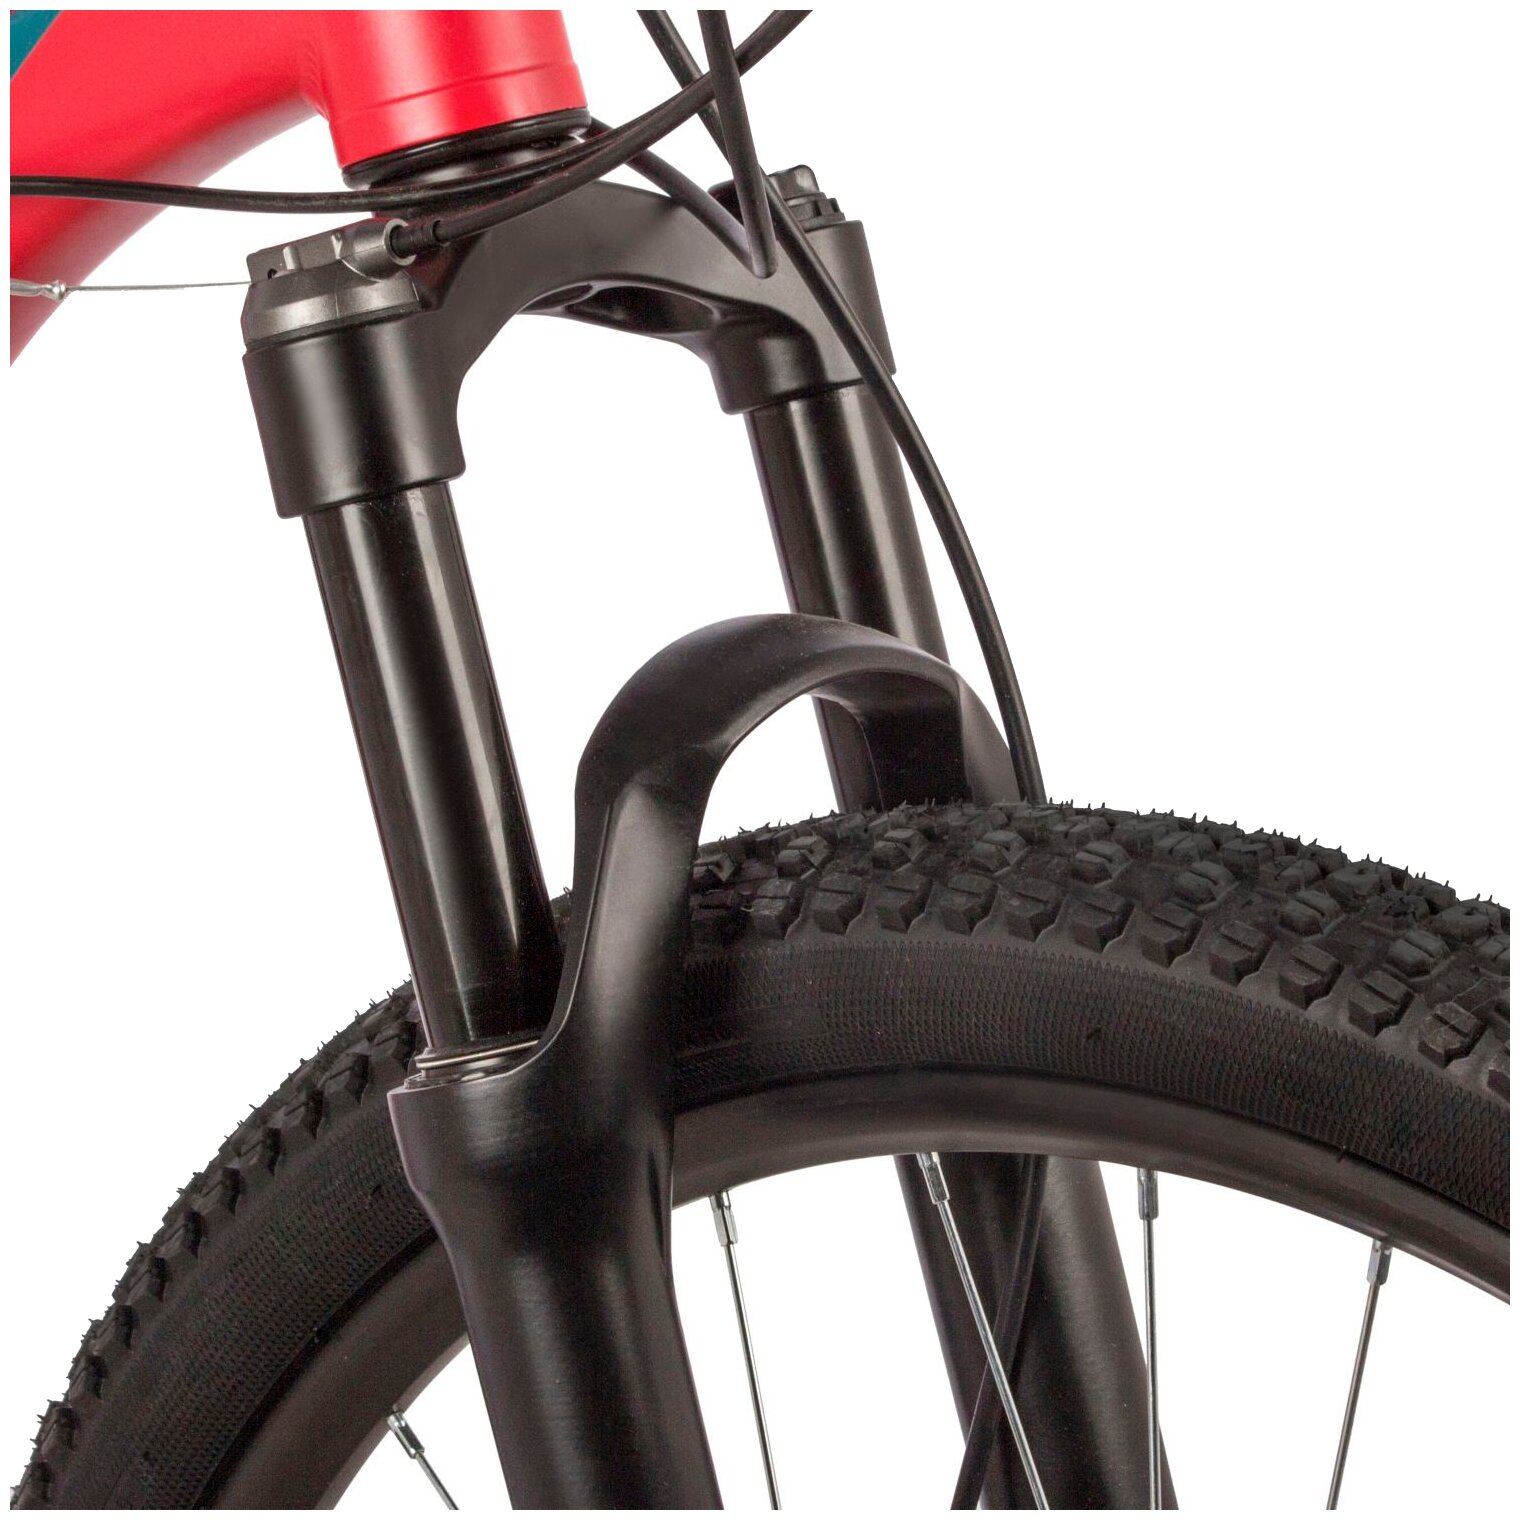 Горный велосипед Stinger Bike Stinger 27.5" Graphite PRO красный, размер 18"